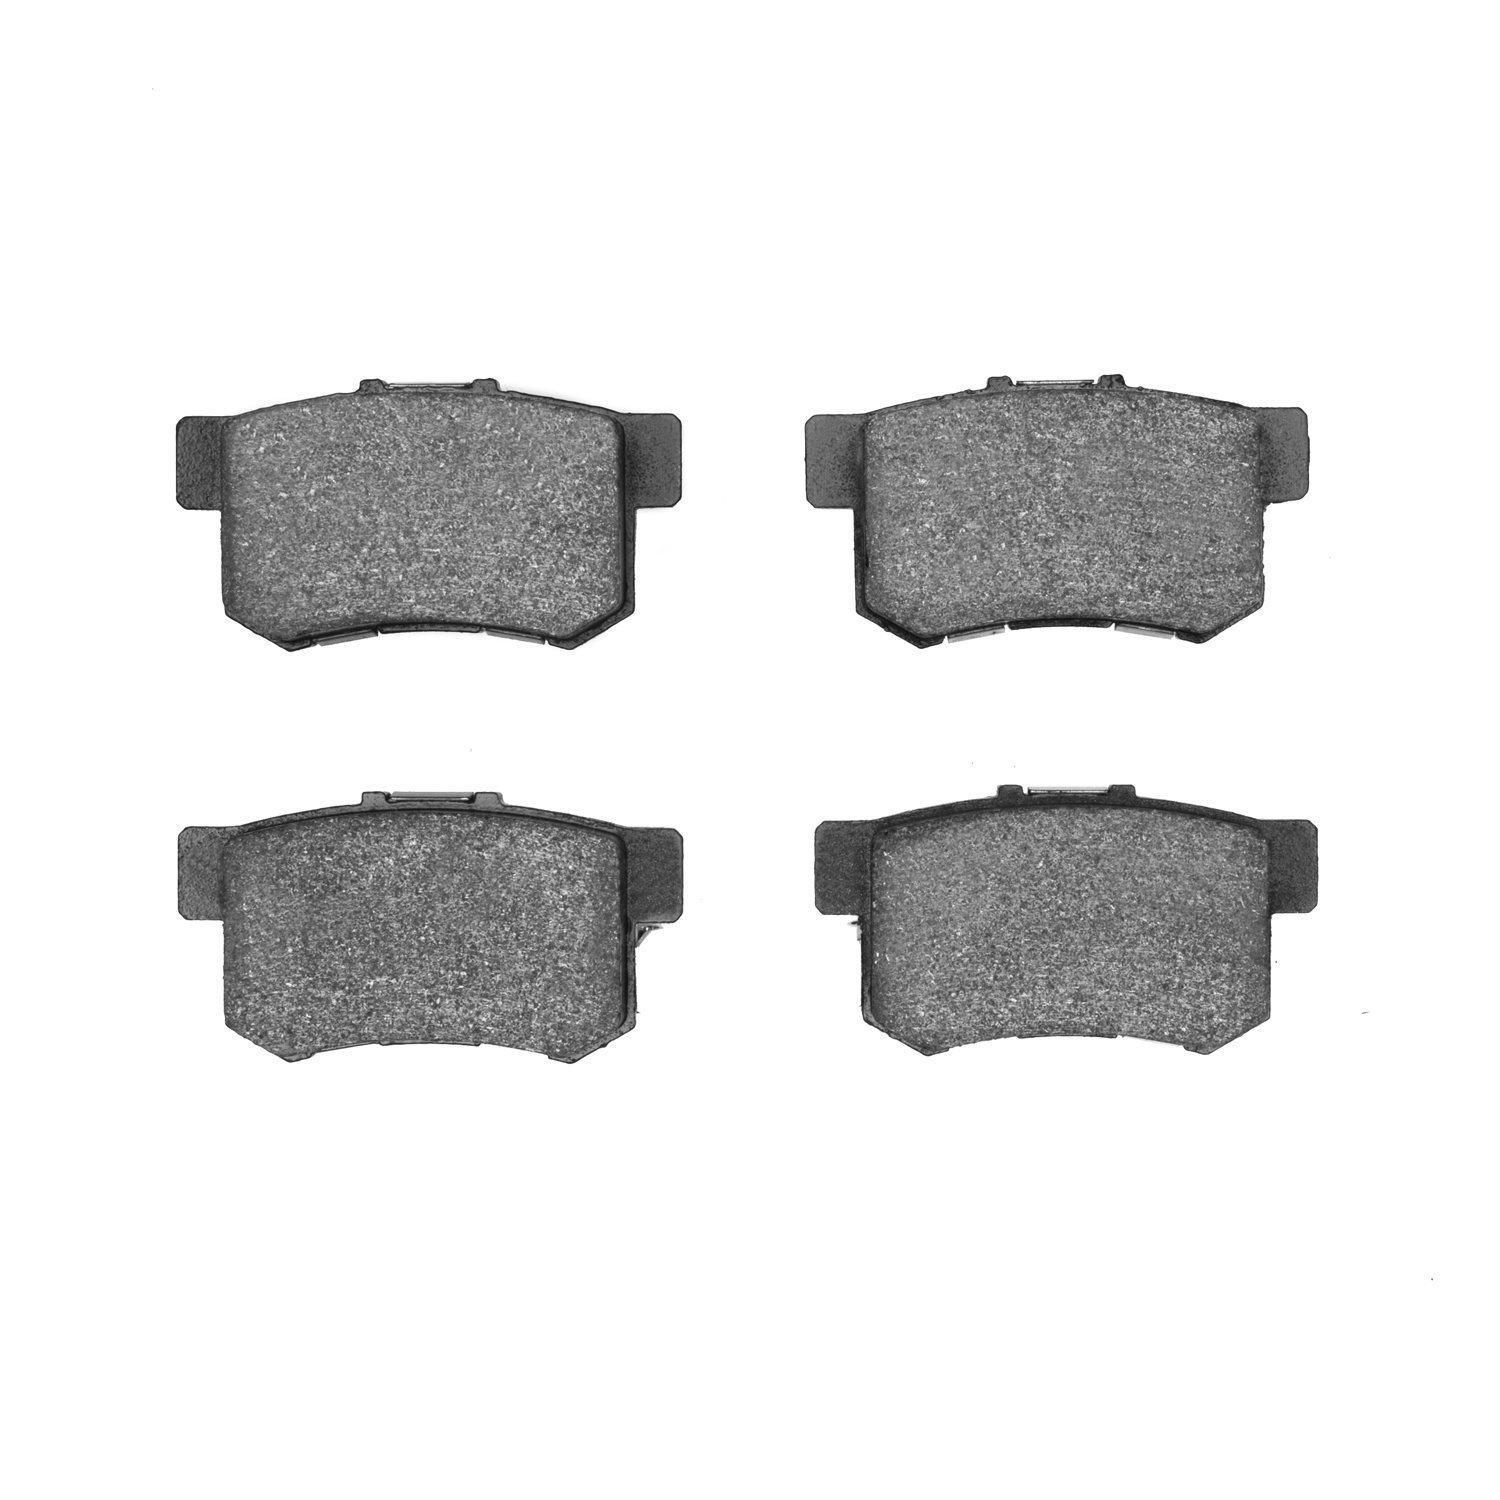 1000-0537-00 Track/Street Low-Metallic Brake Pads Kit, Fits Select Multiple Makes/Models, Position: Rear